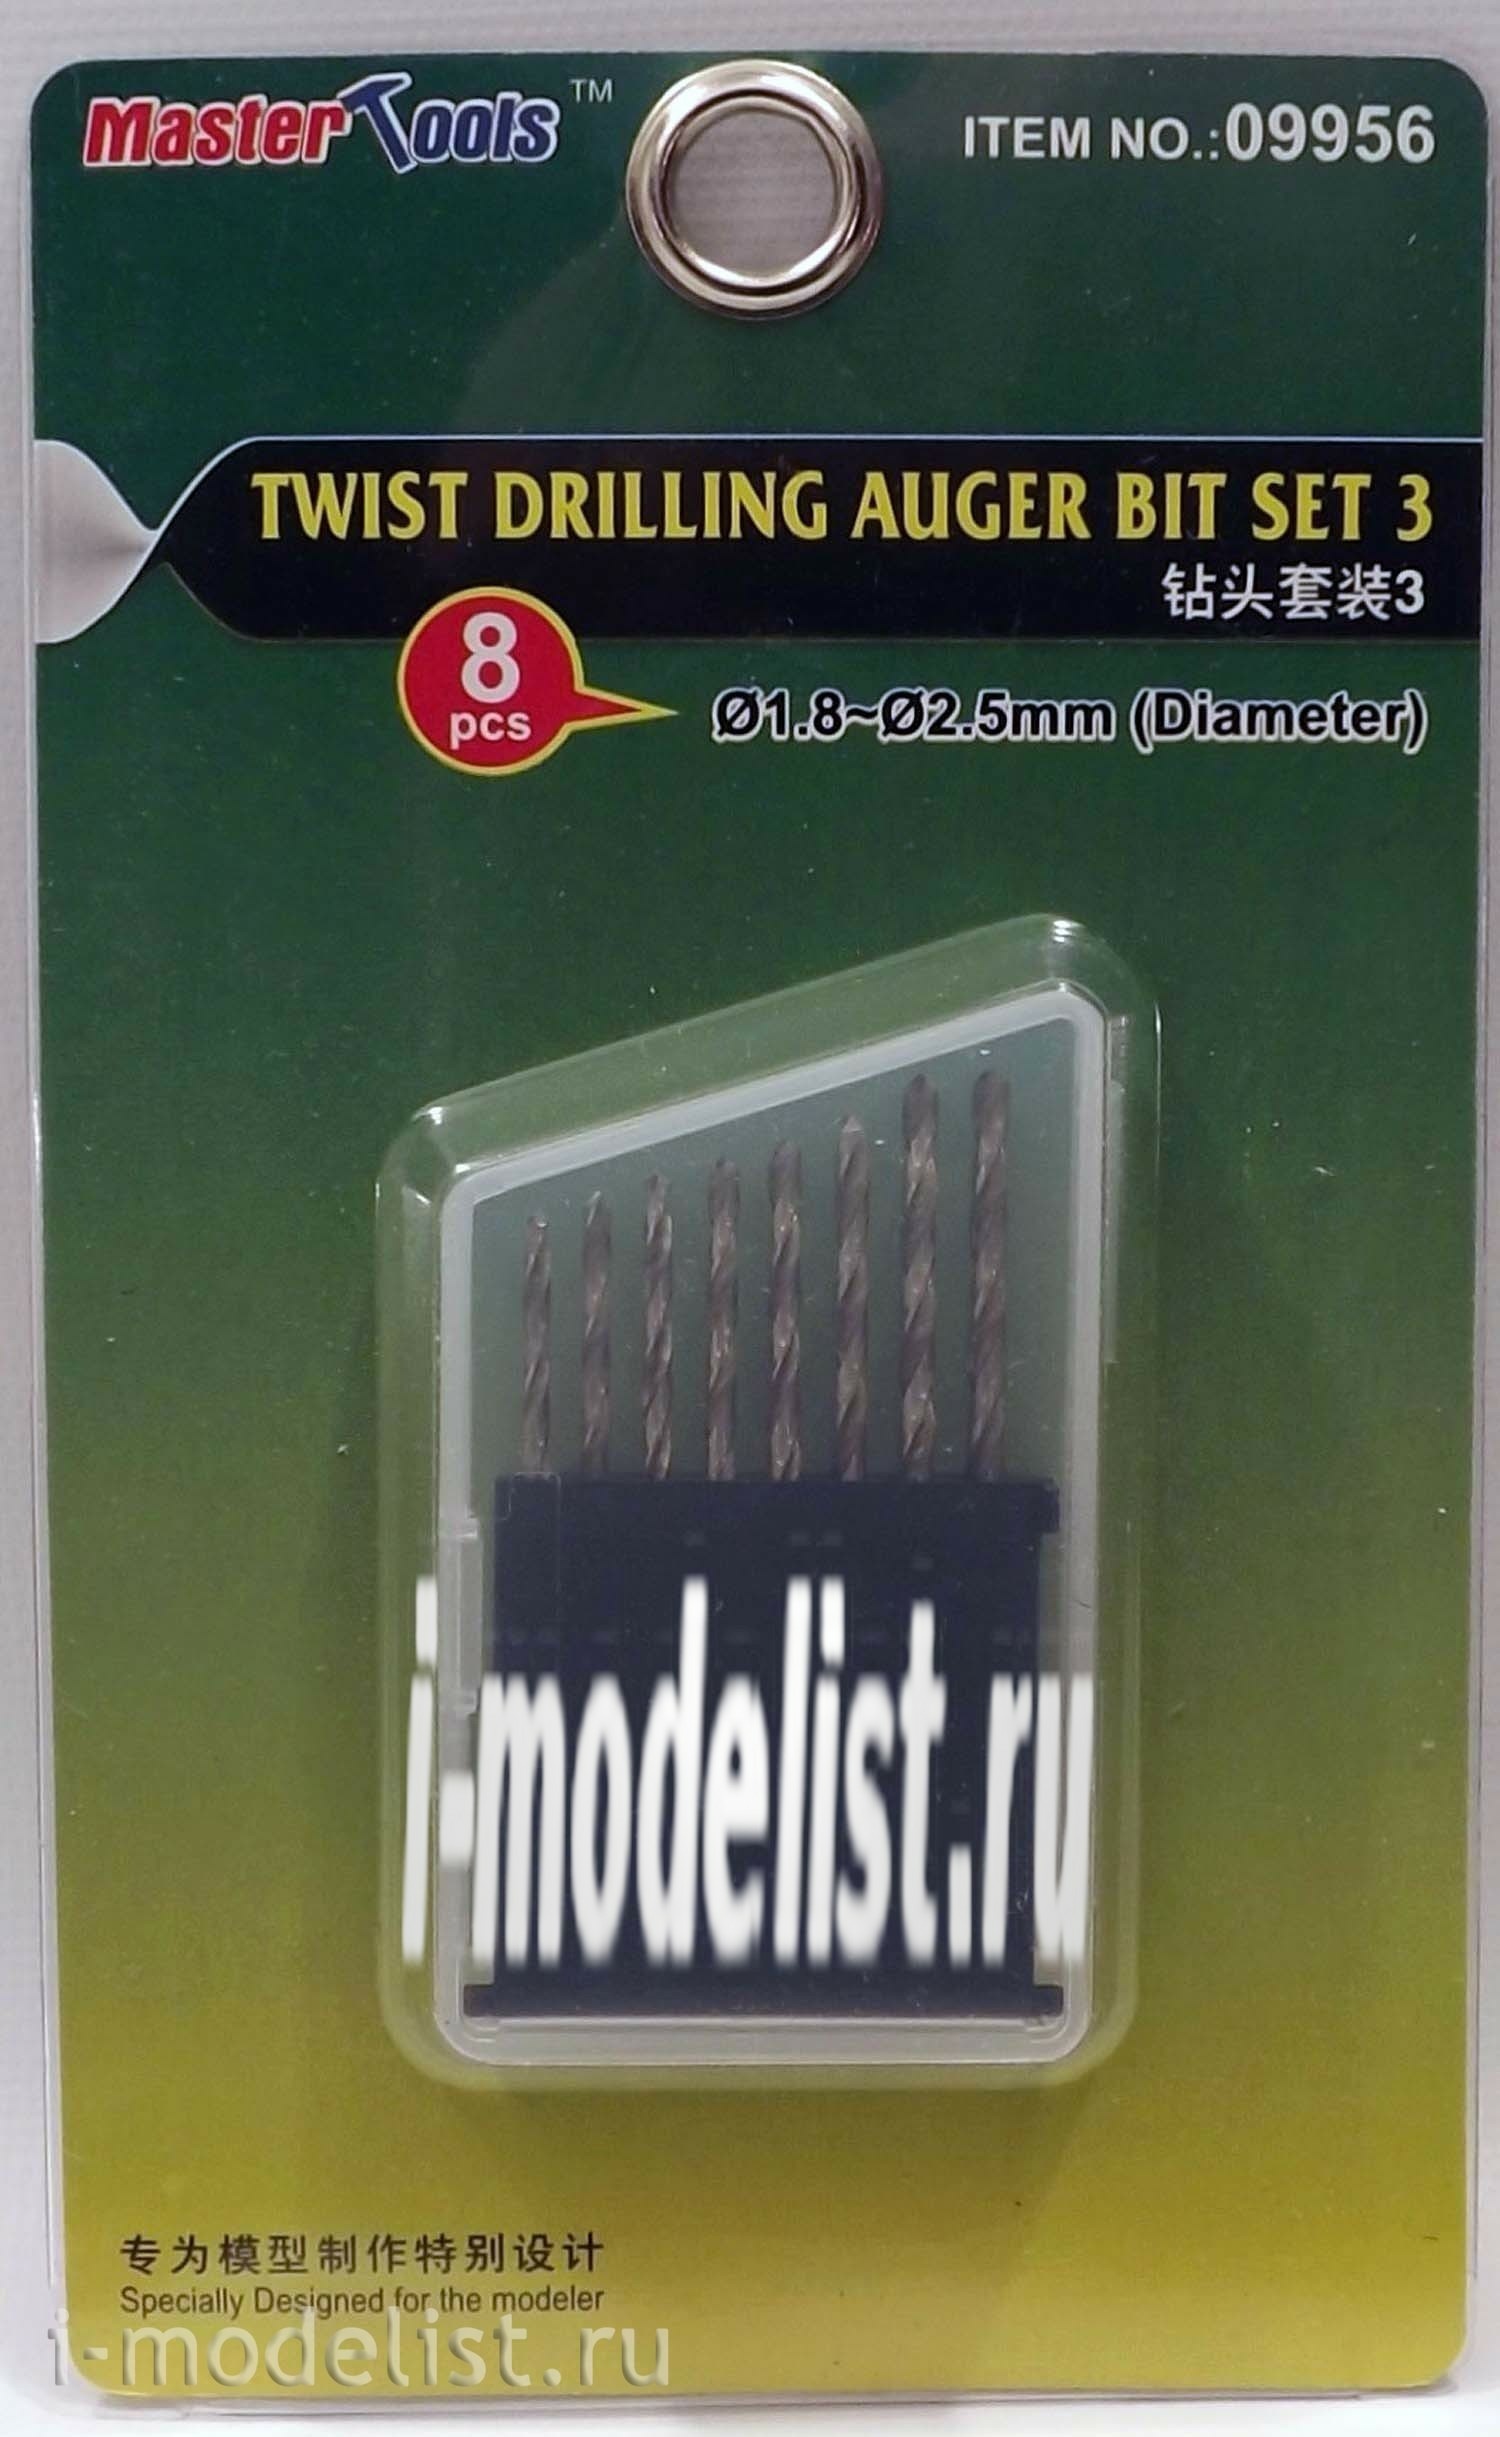 09956 Trumpeter Twist Drilling Auger Bit Set 3